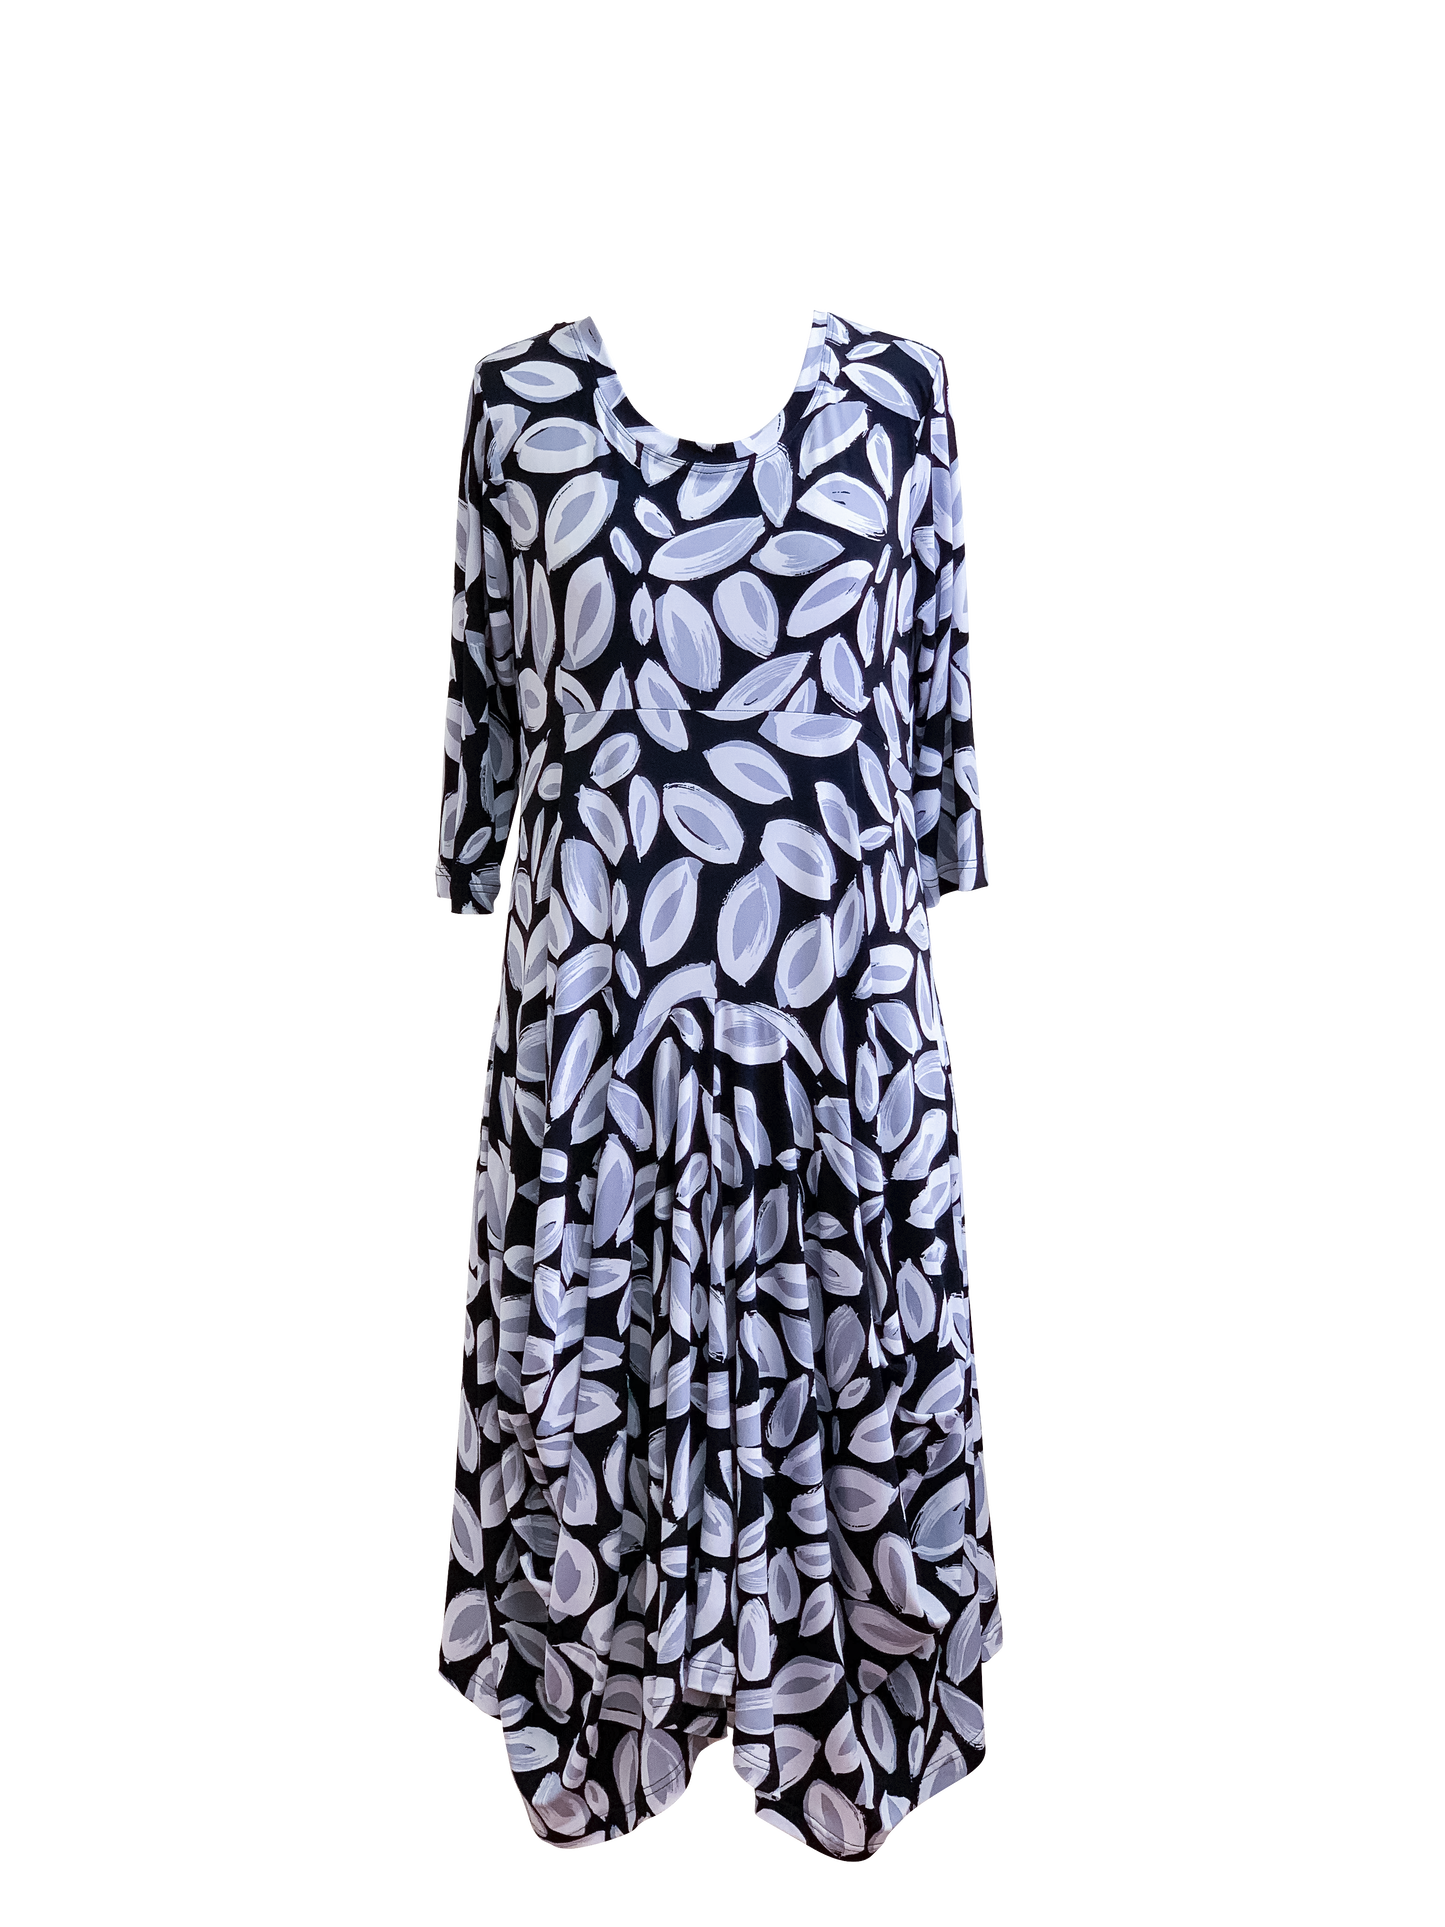 Bittermoon -  Atlanta Dress - D9044POL - Chrome - 50% Off 1 x 10 left